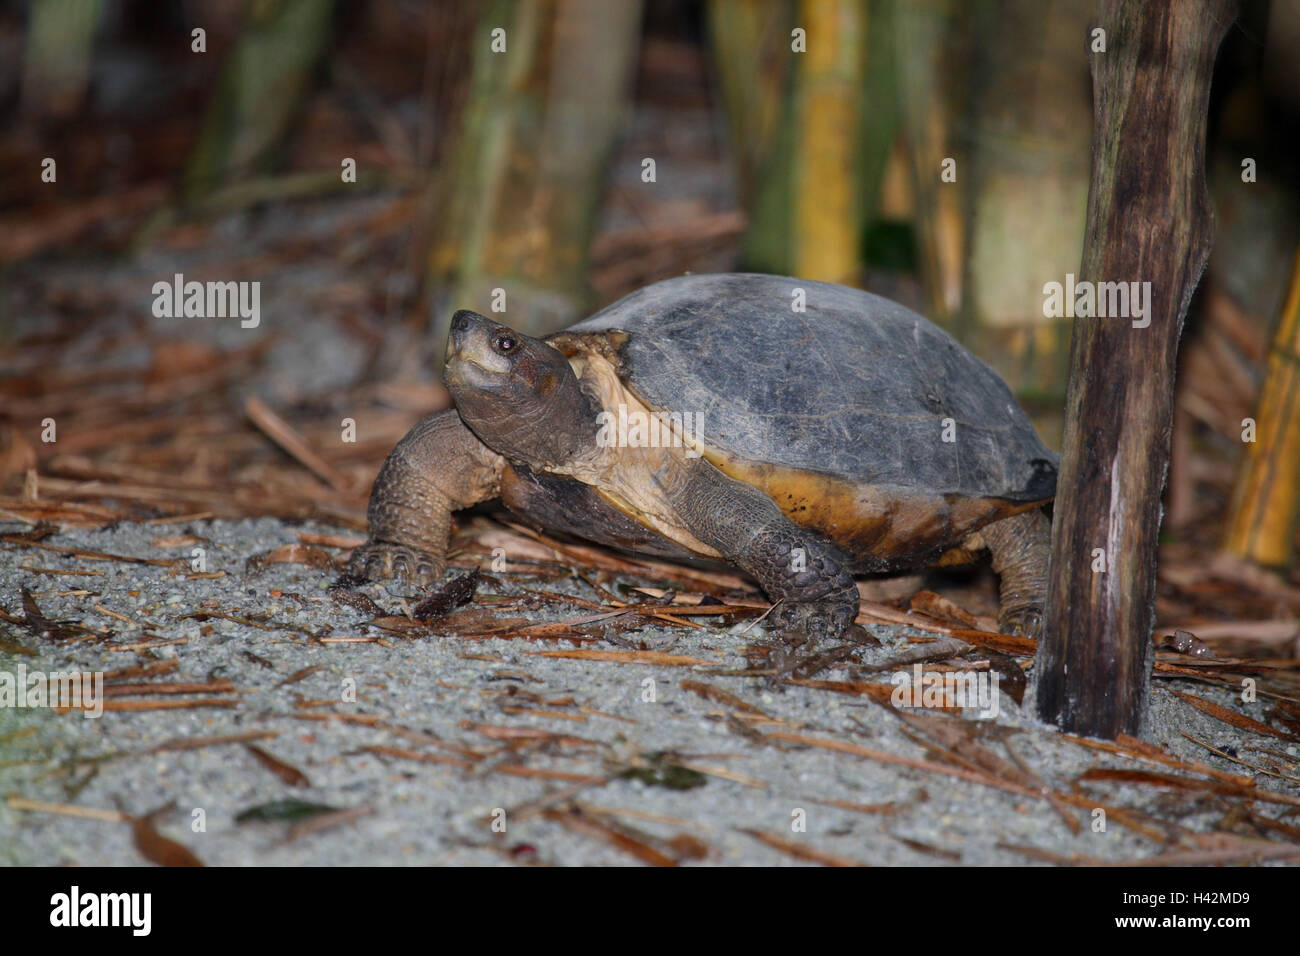 Giant-earth tortoise, Stock Photo